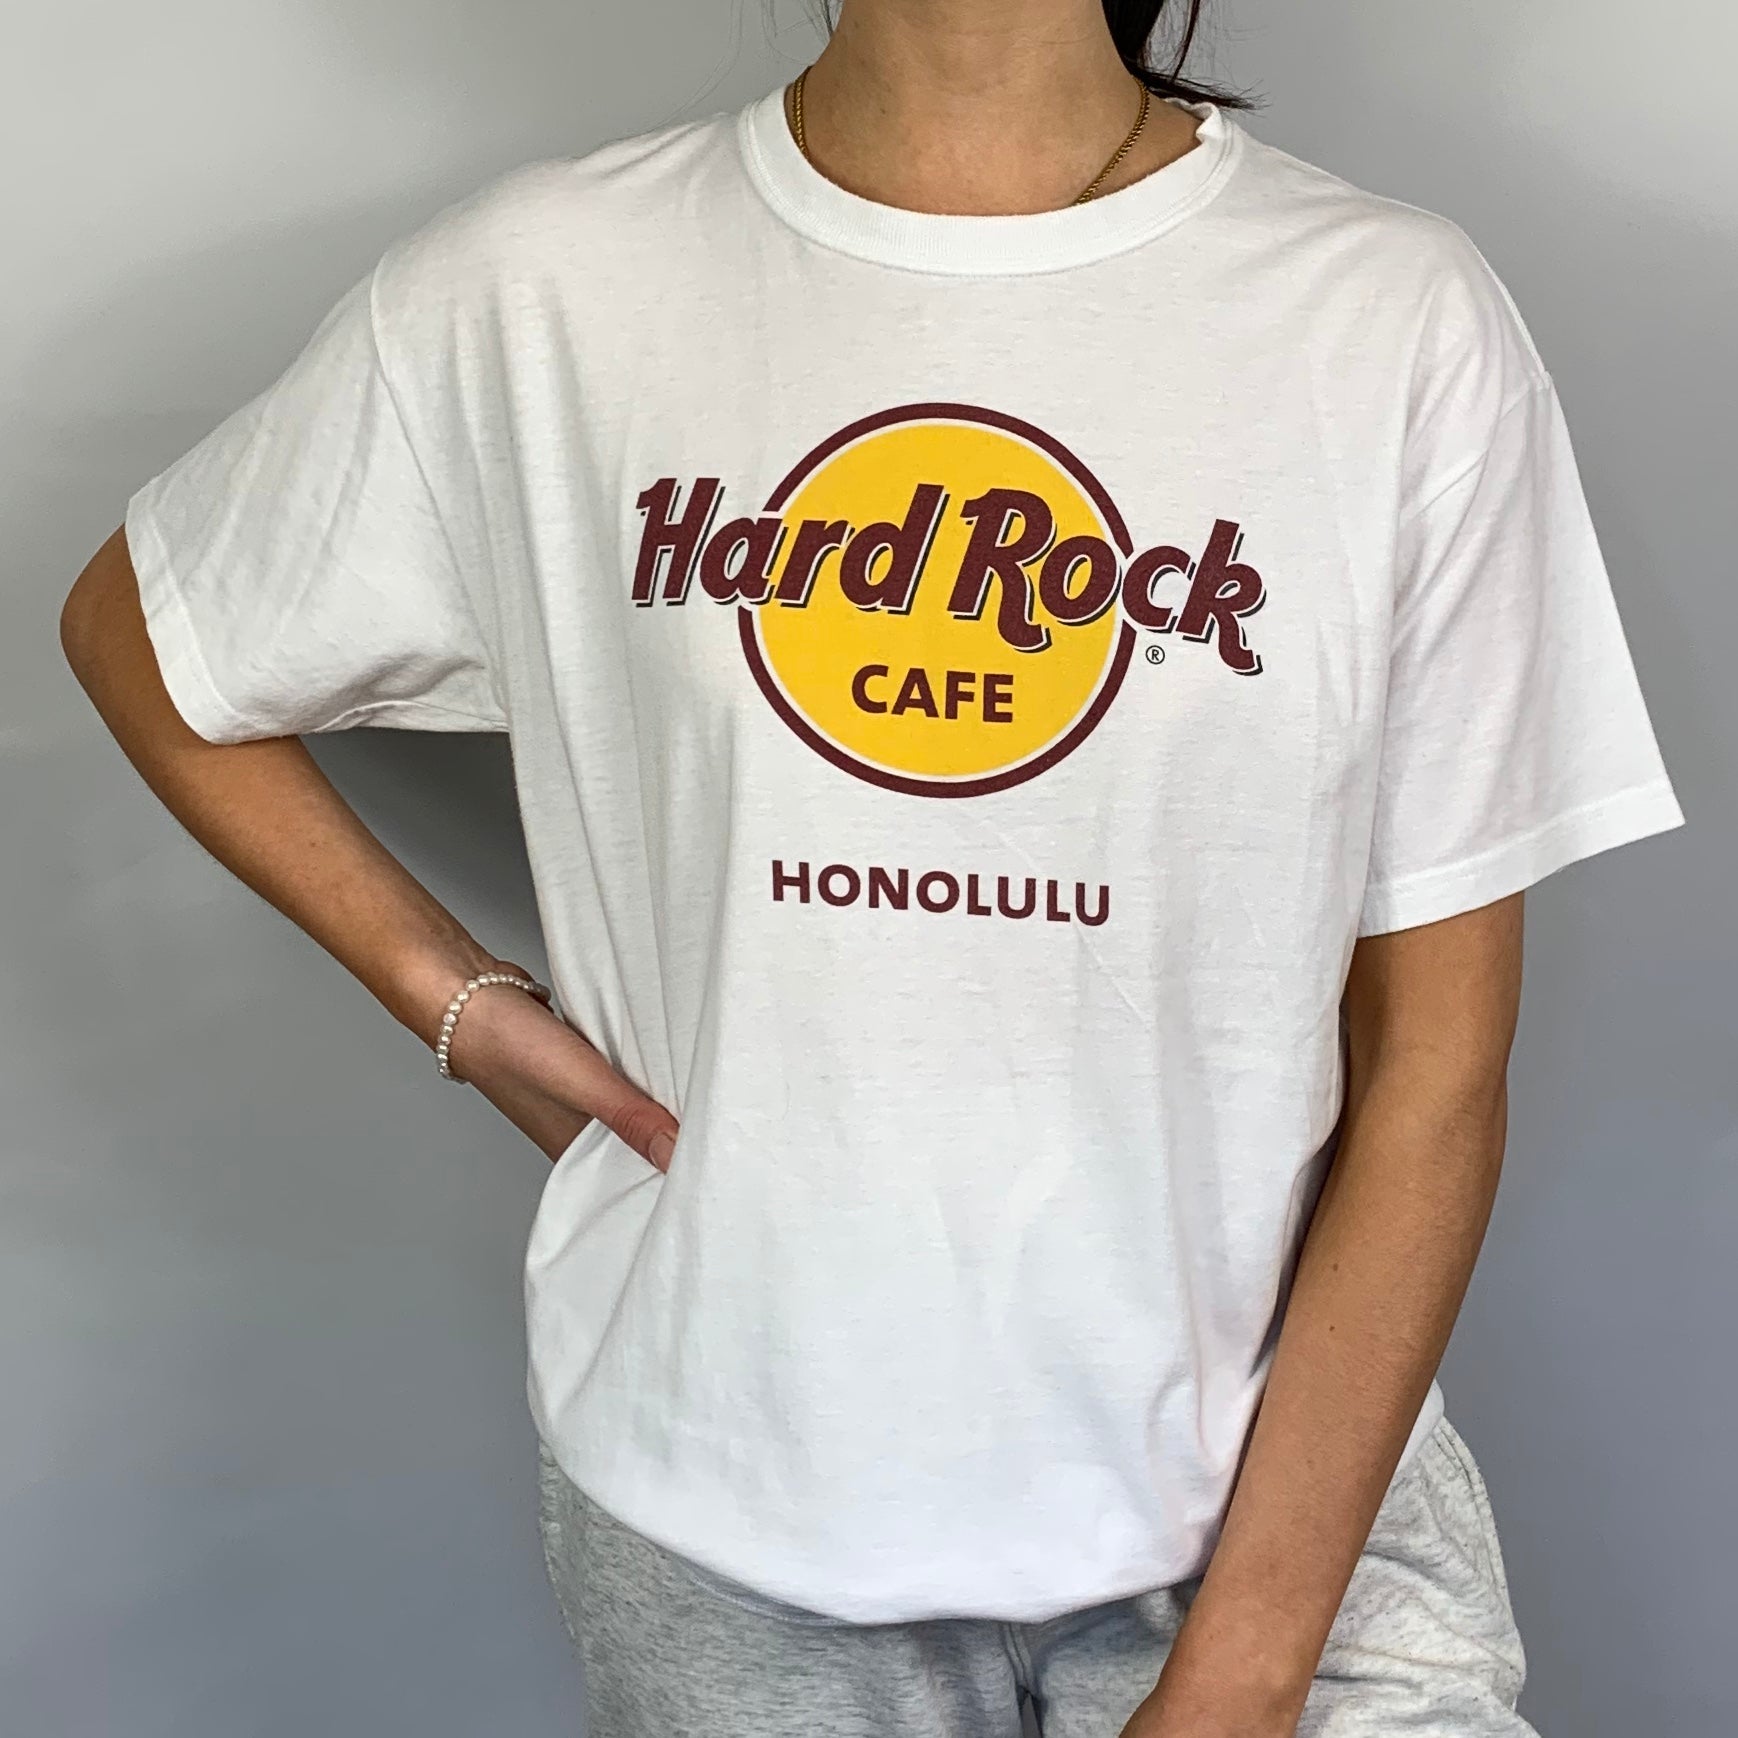 VINTAGE HARD ROCK CAFE Honolulu T-SHIRT - WOMEN'S Large/ Men's Small